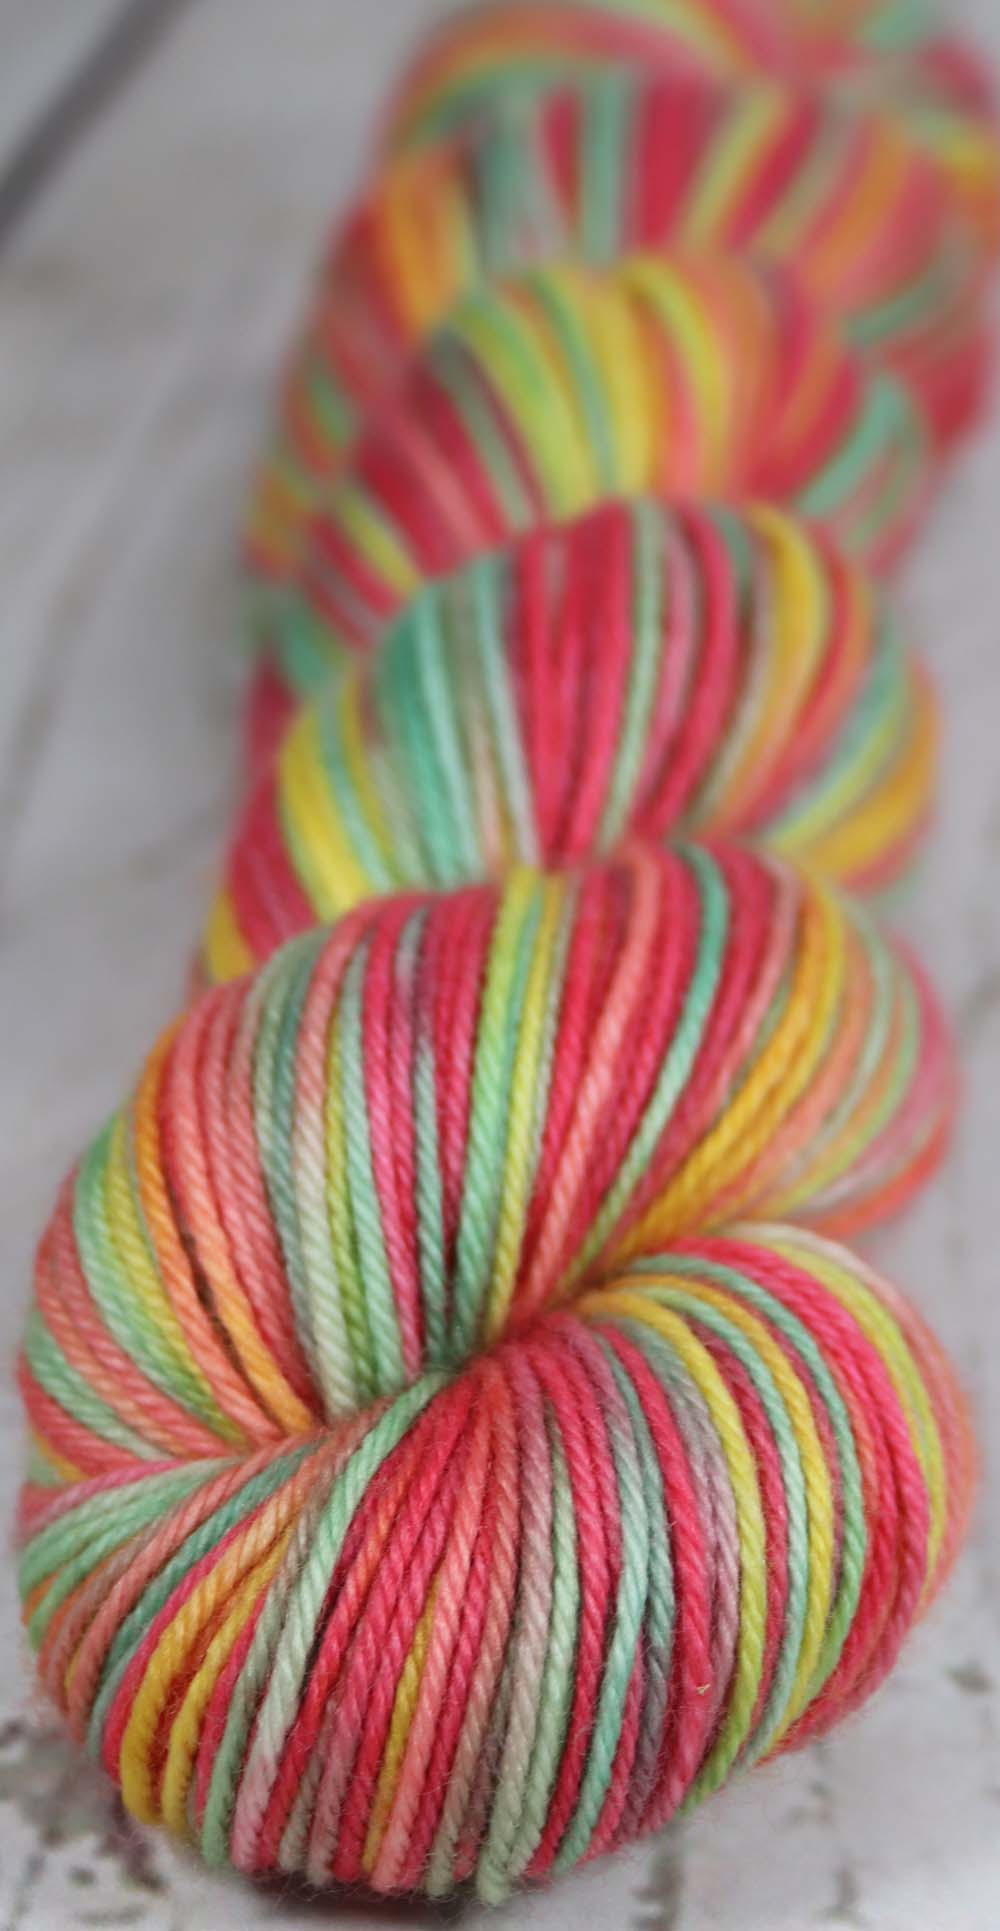 VIBRANCY AT THE PLANTATION: SW Merino-Nylon DK - Hand dyed variegated yarn